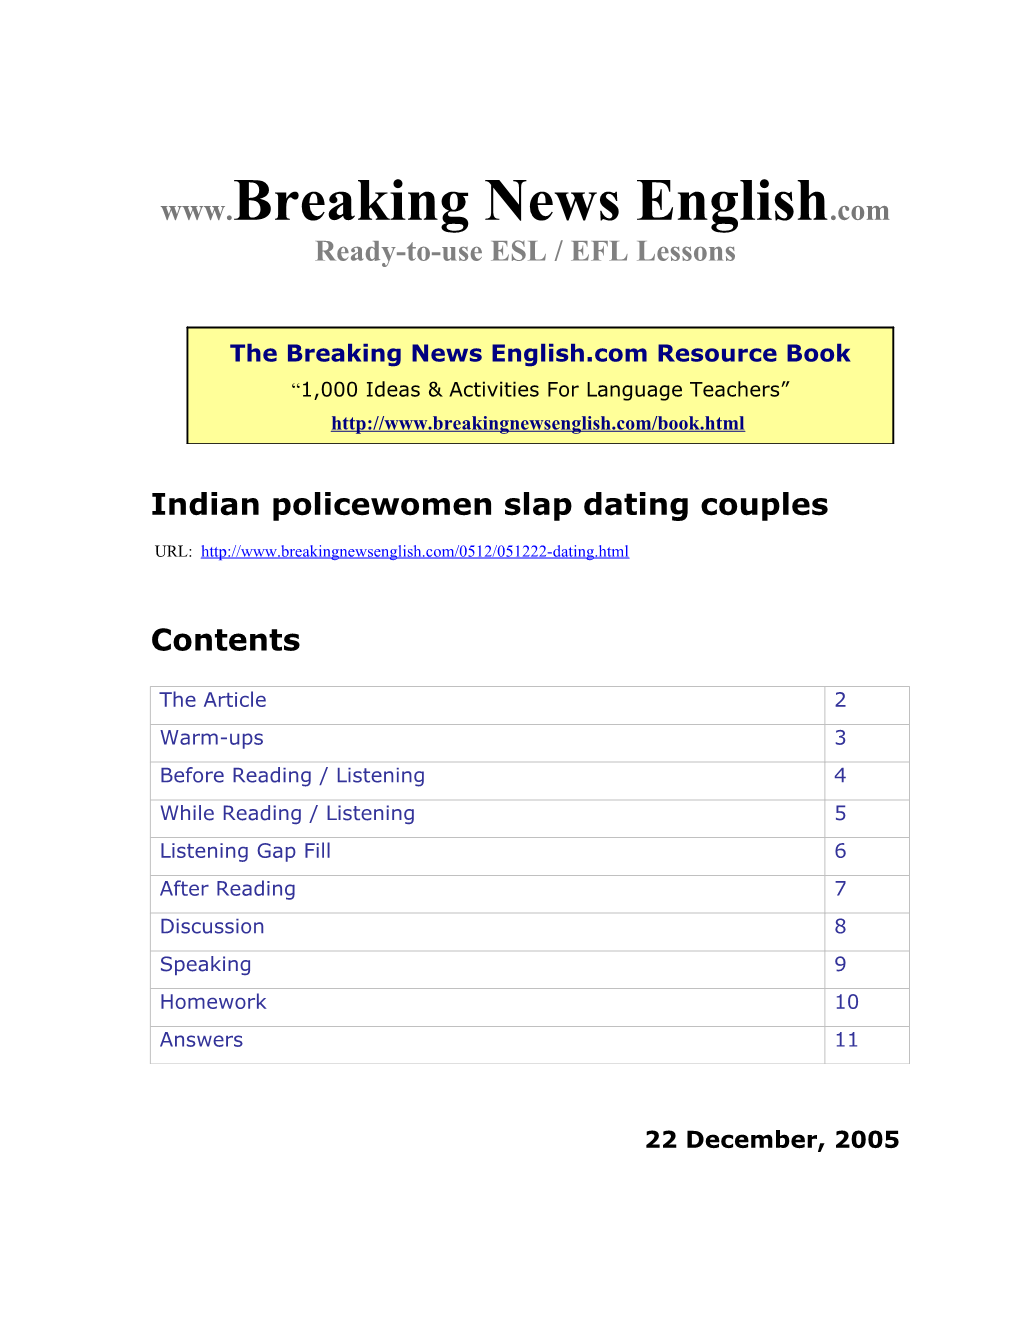 Indian Policewomen Slap Dating Couples